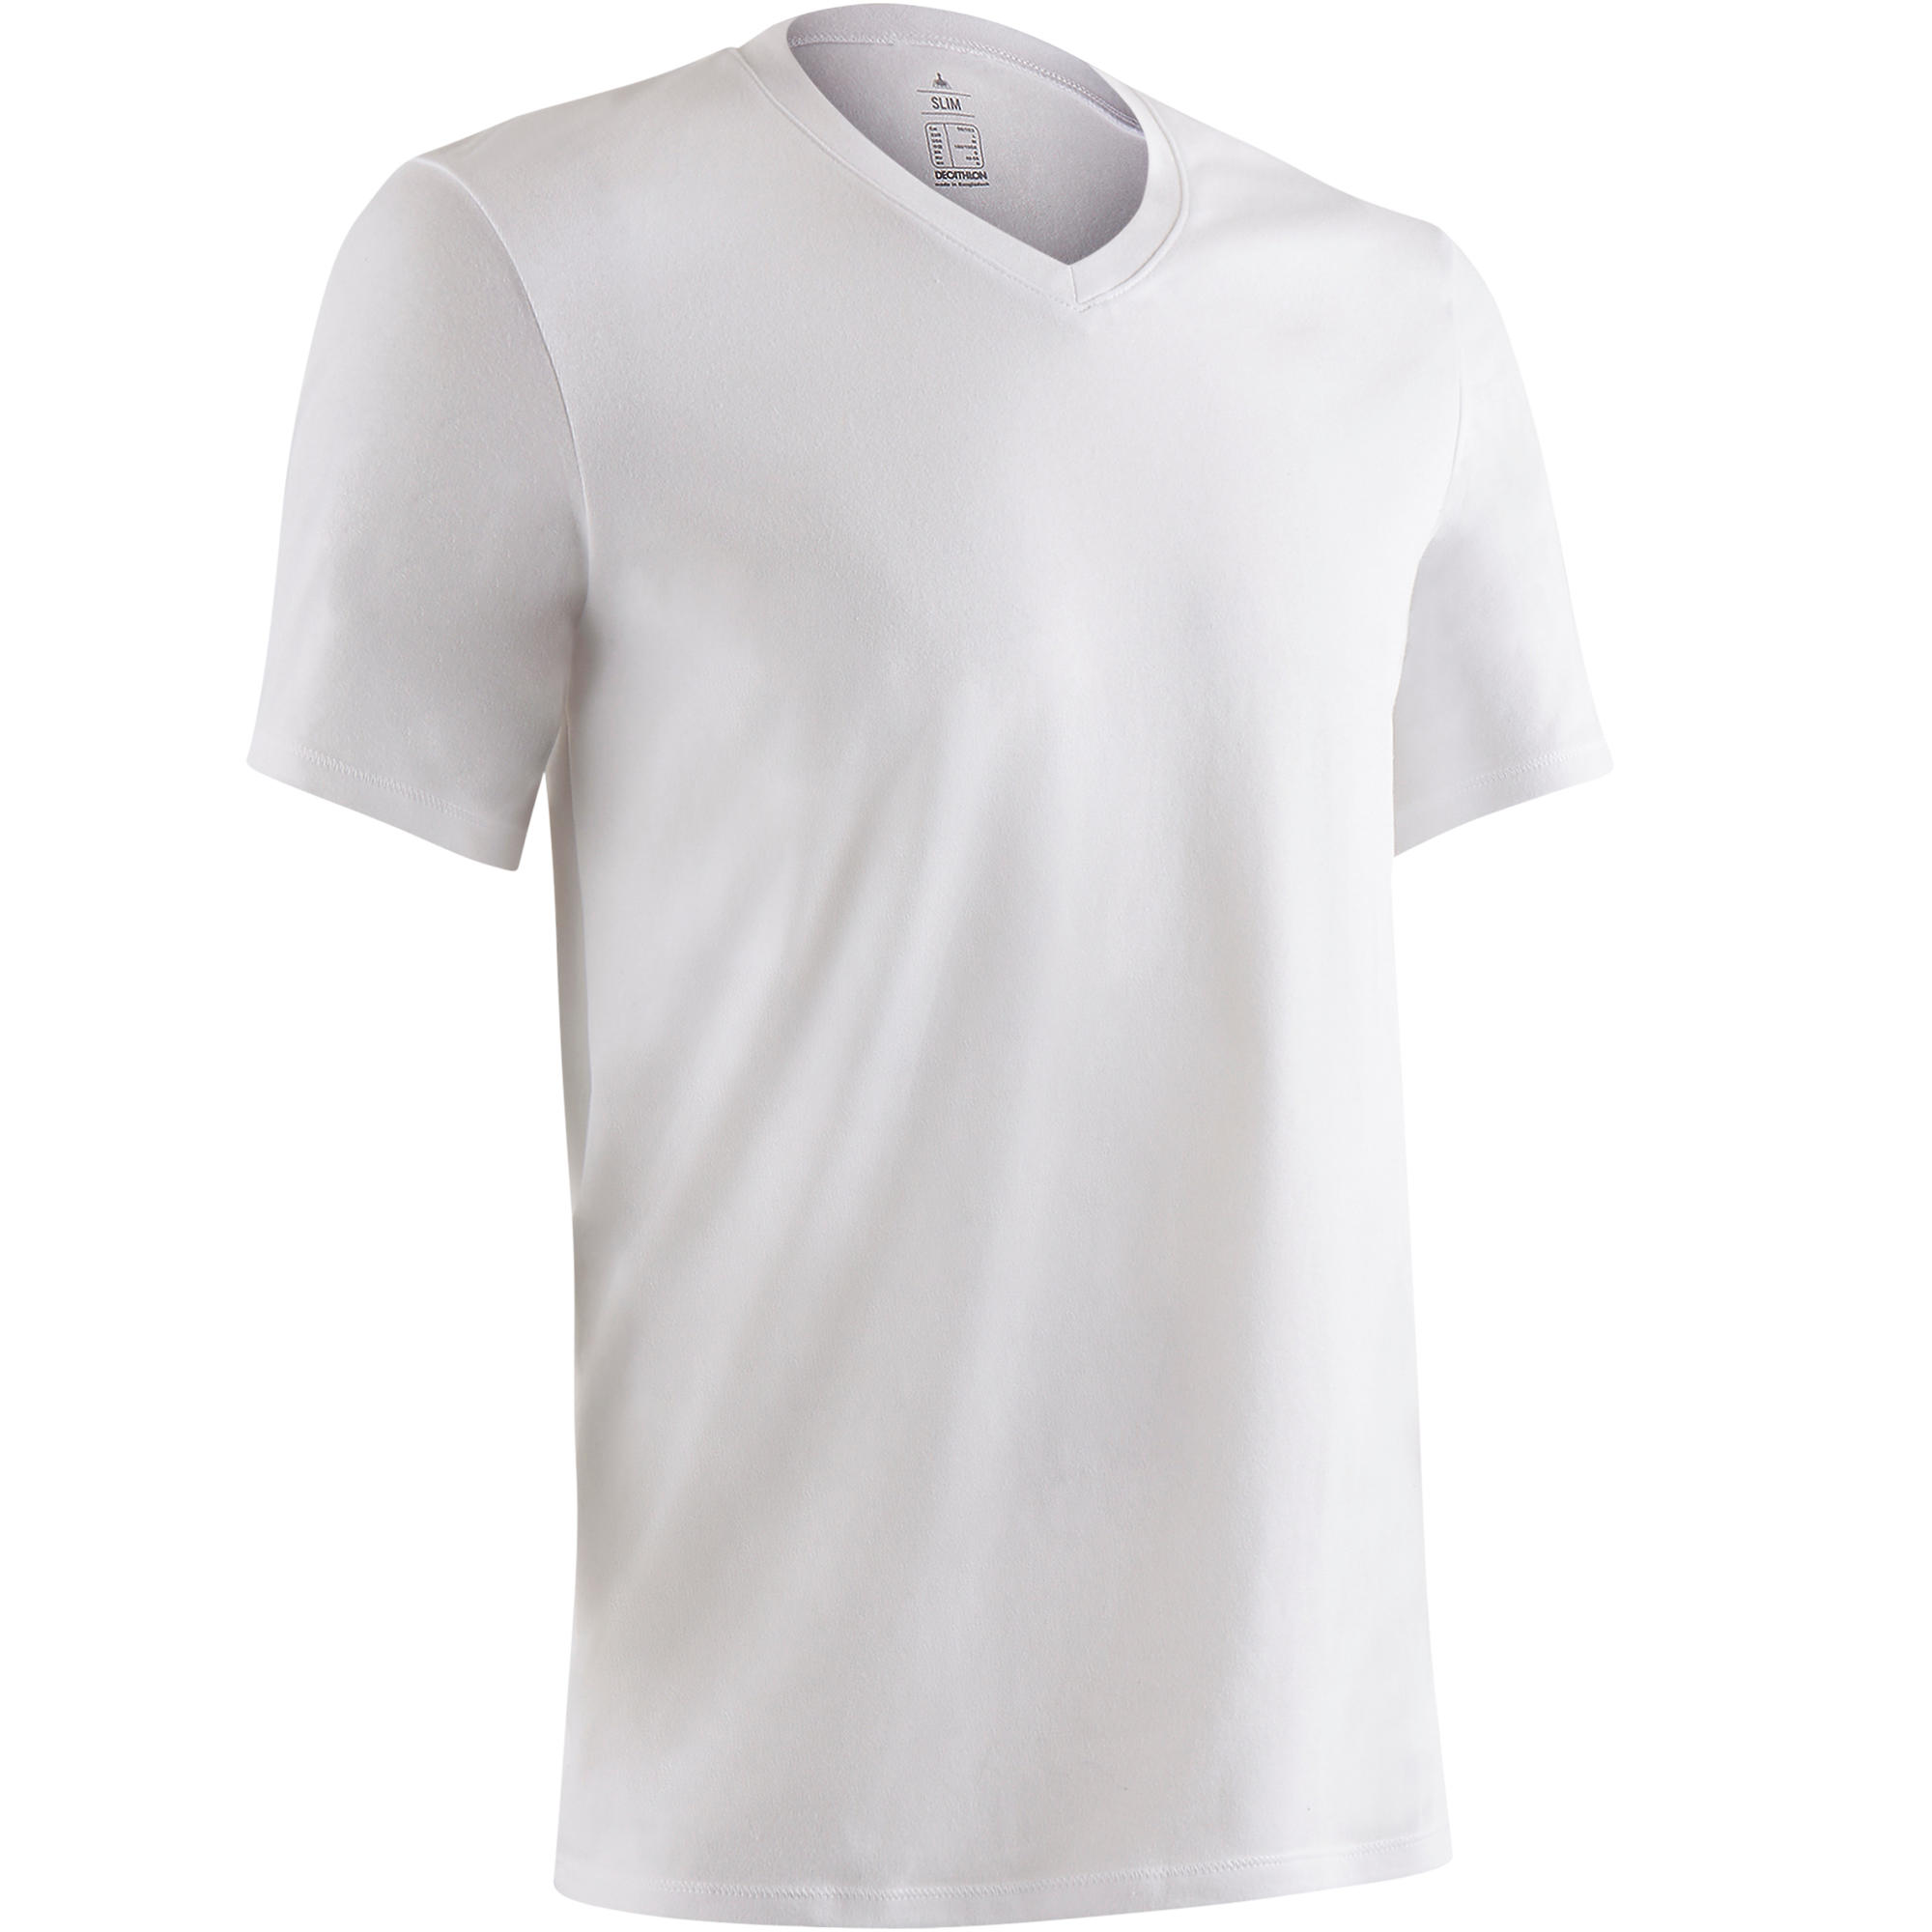 500 Slim-Fit V-Neck Pilates & Gentle Gym T-Shirt - White 1/10